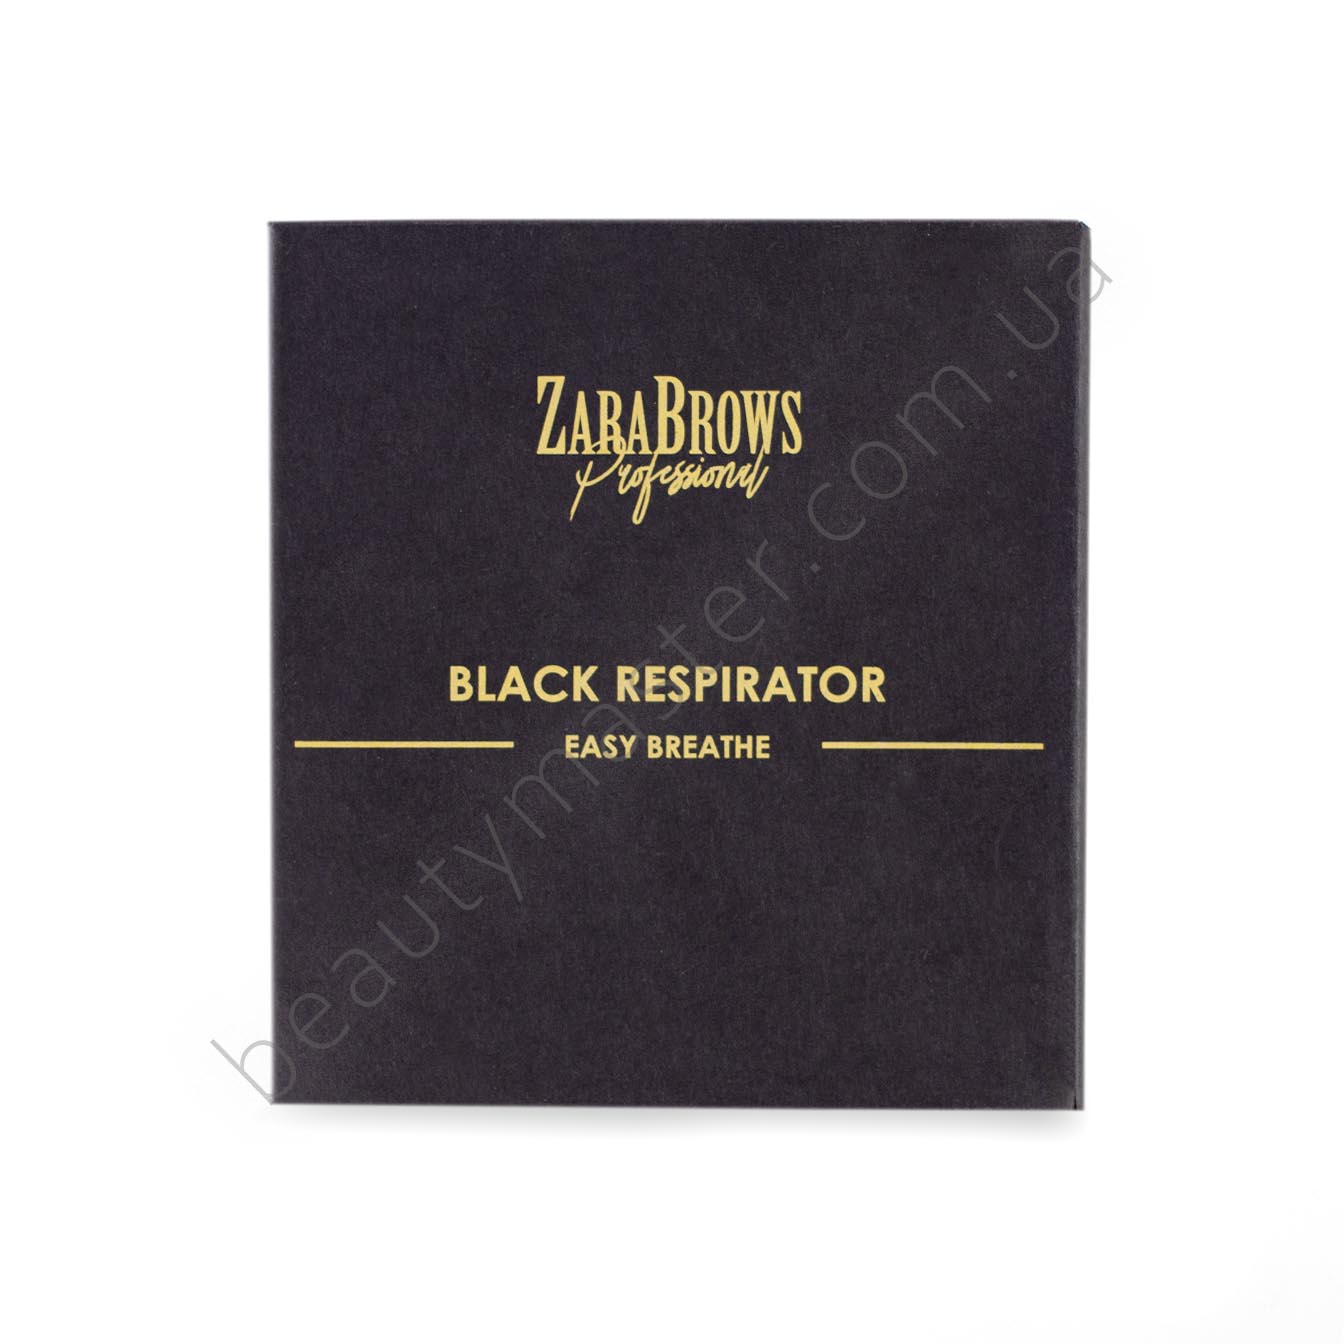 Zara Brows маска-респиратор Easy Breathe